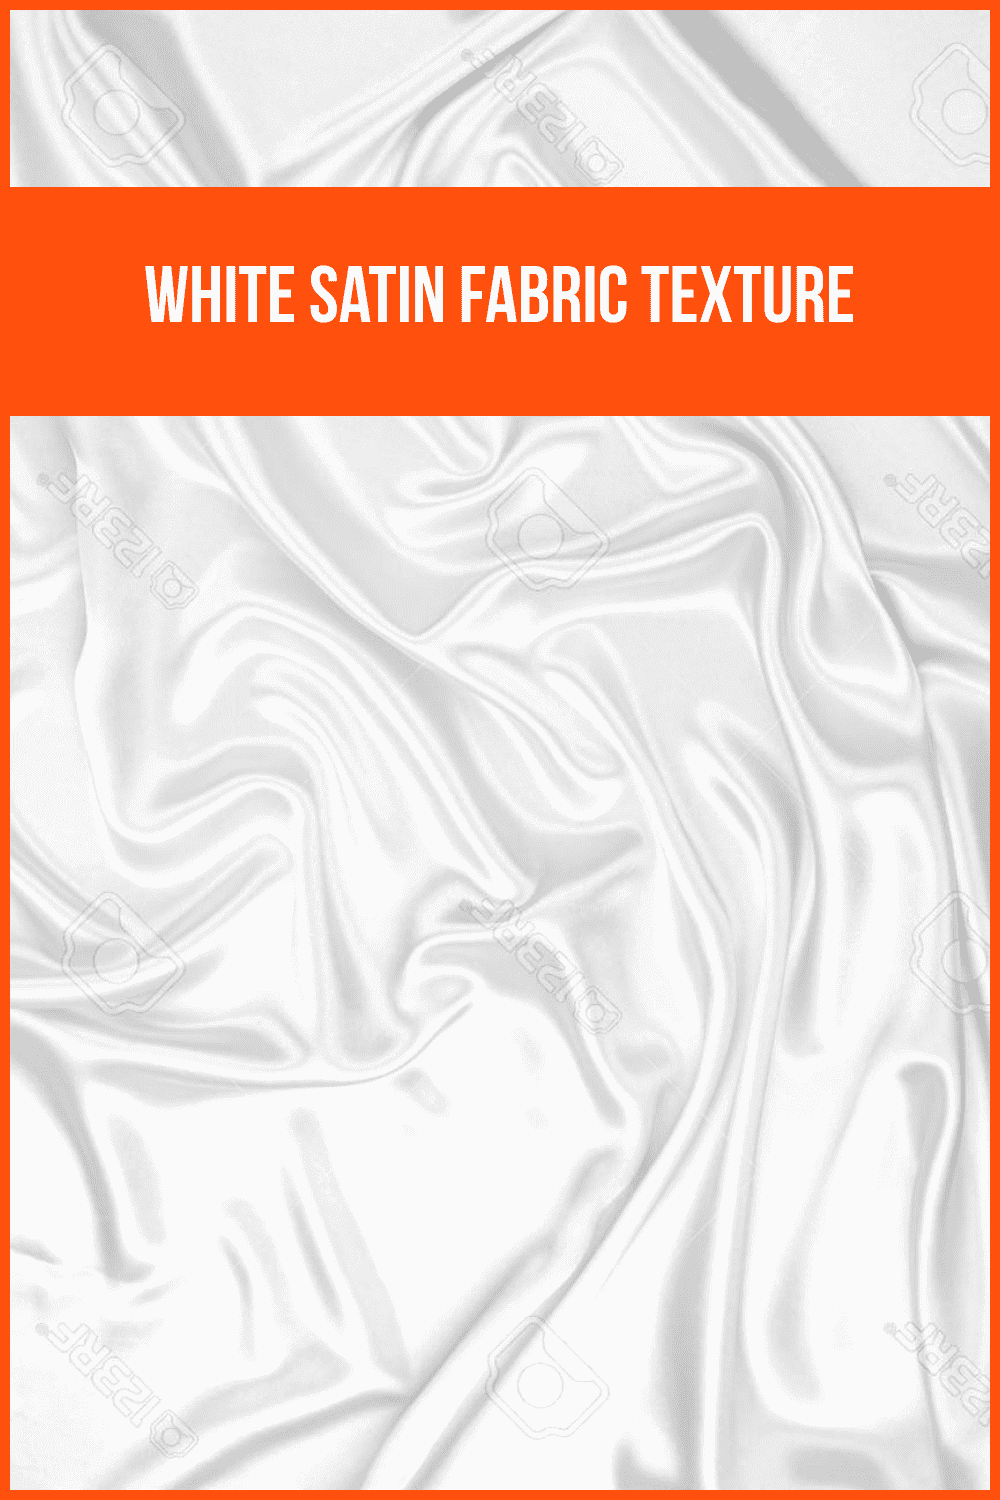 White Satin Fabric Texture.